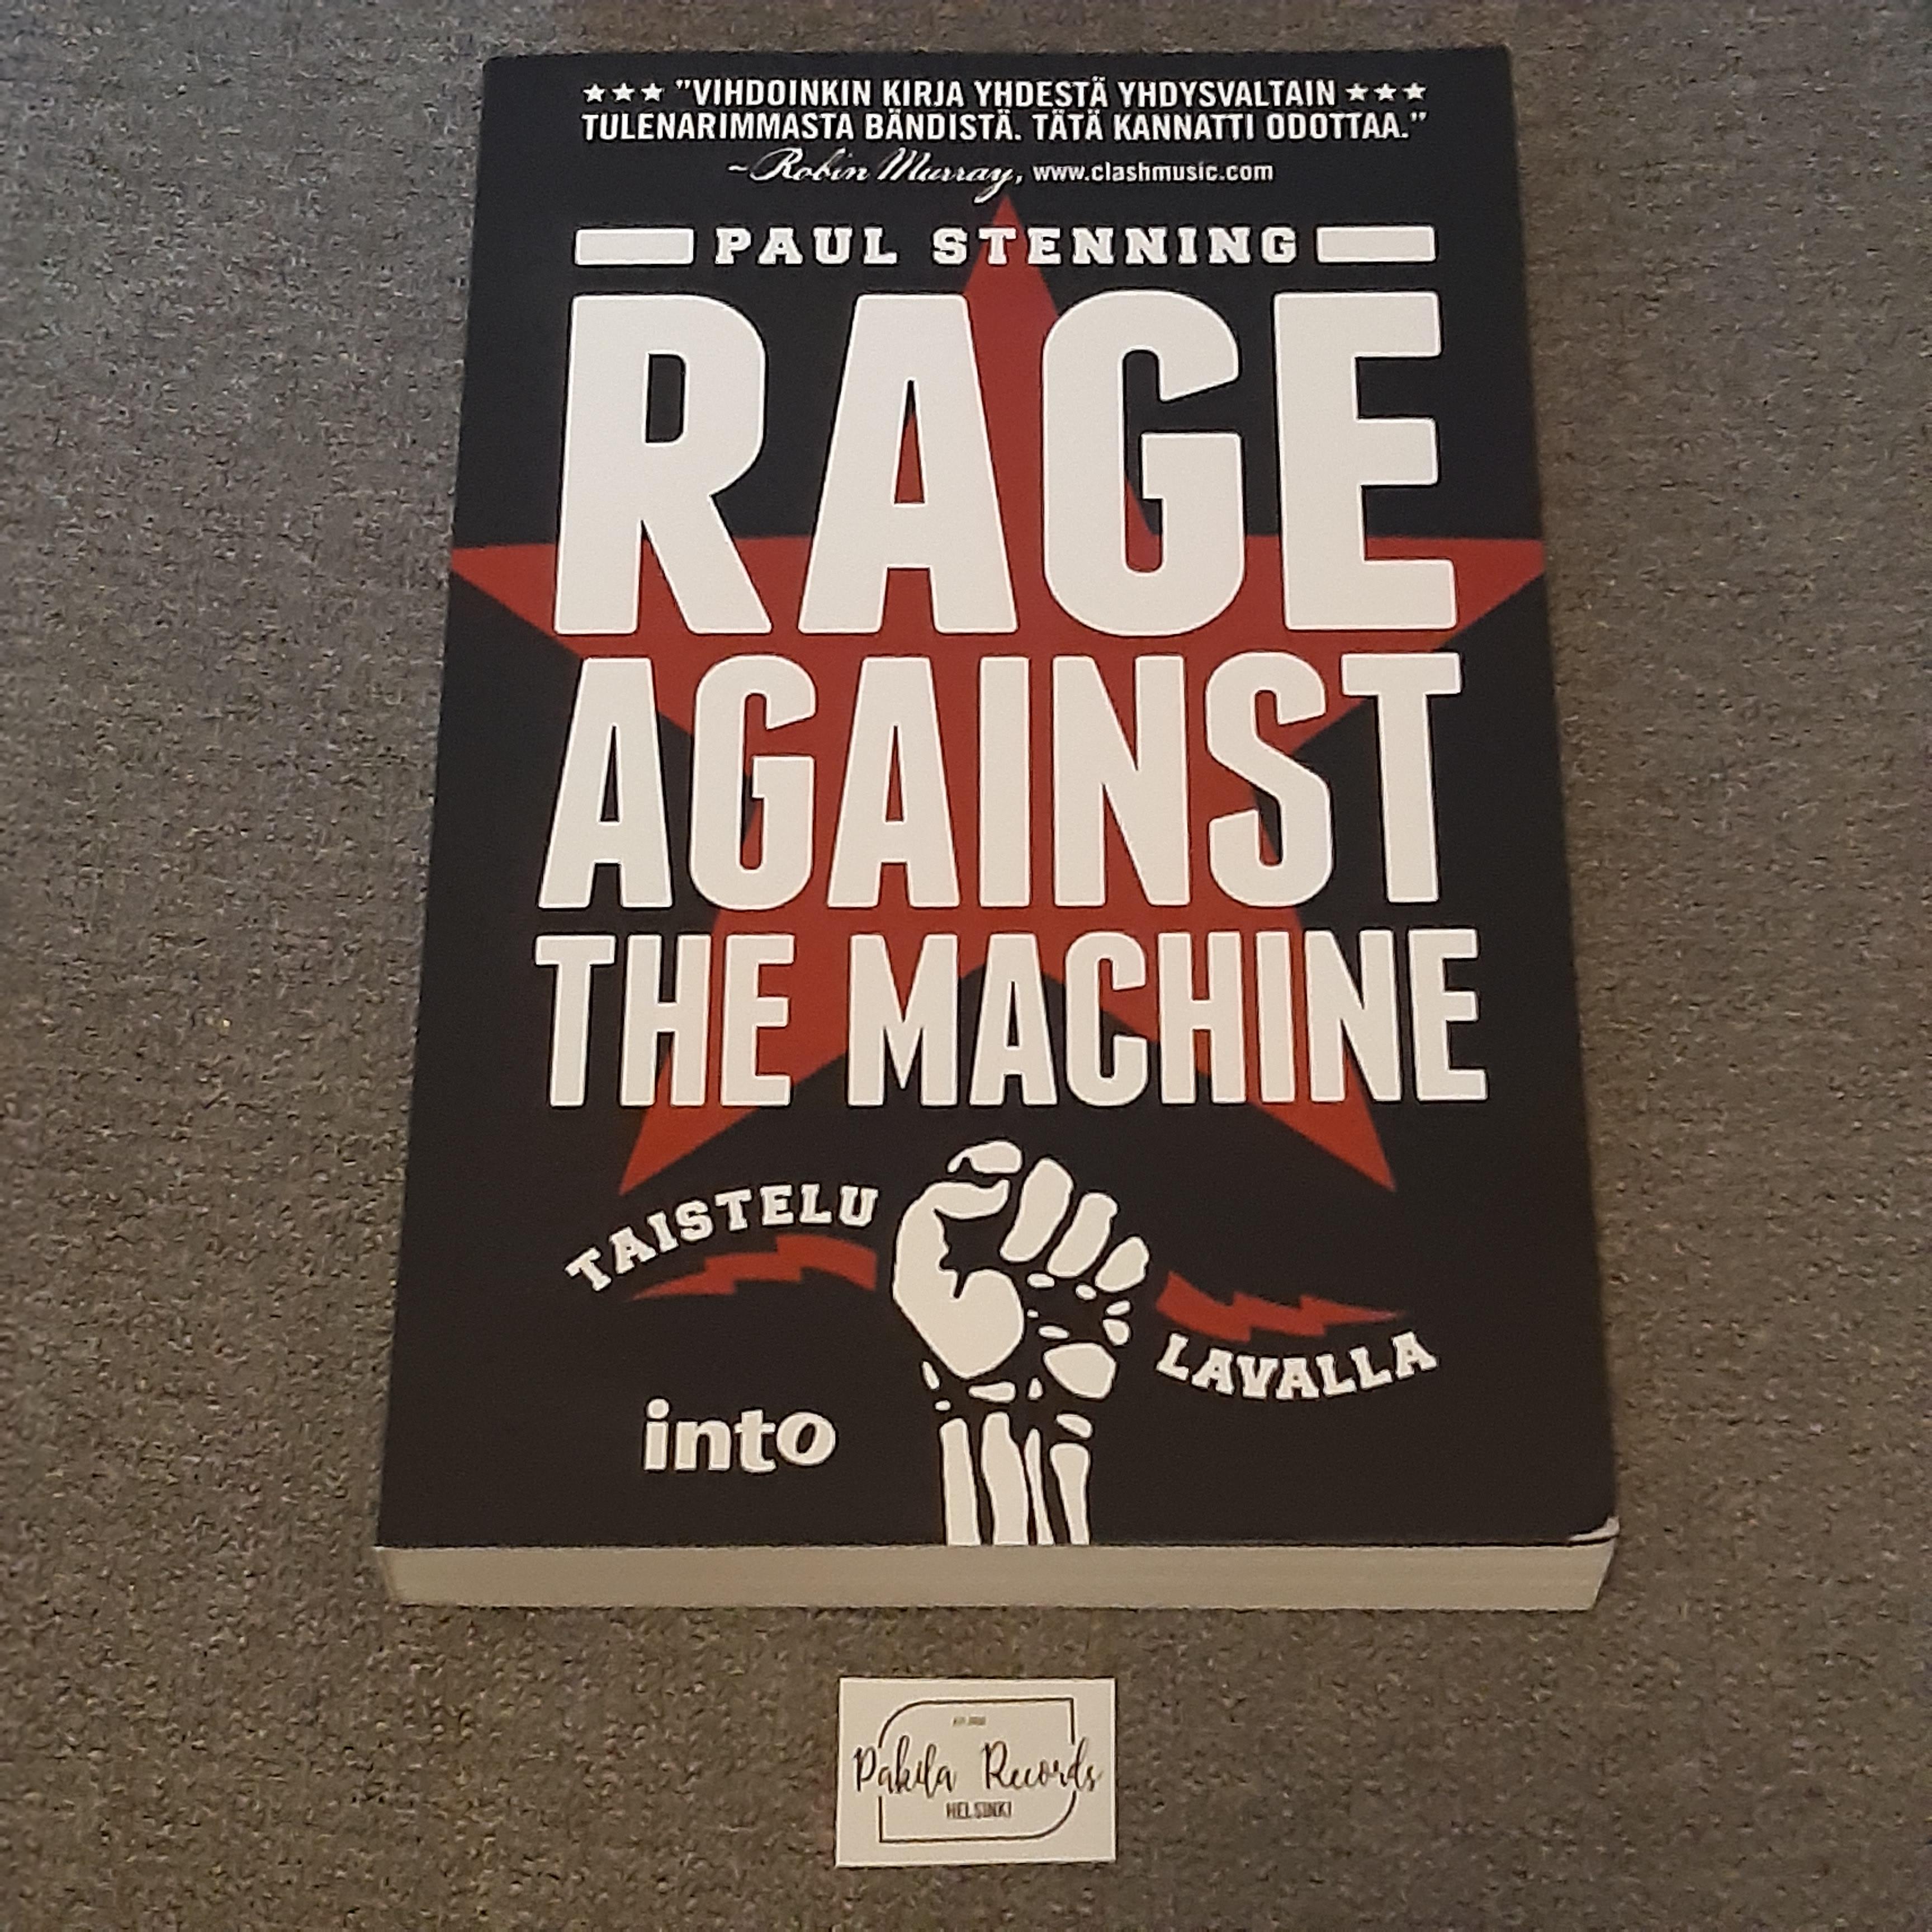 Rage Against The Machine - Paul Stenning - Kirja (käytetty)